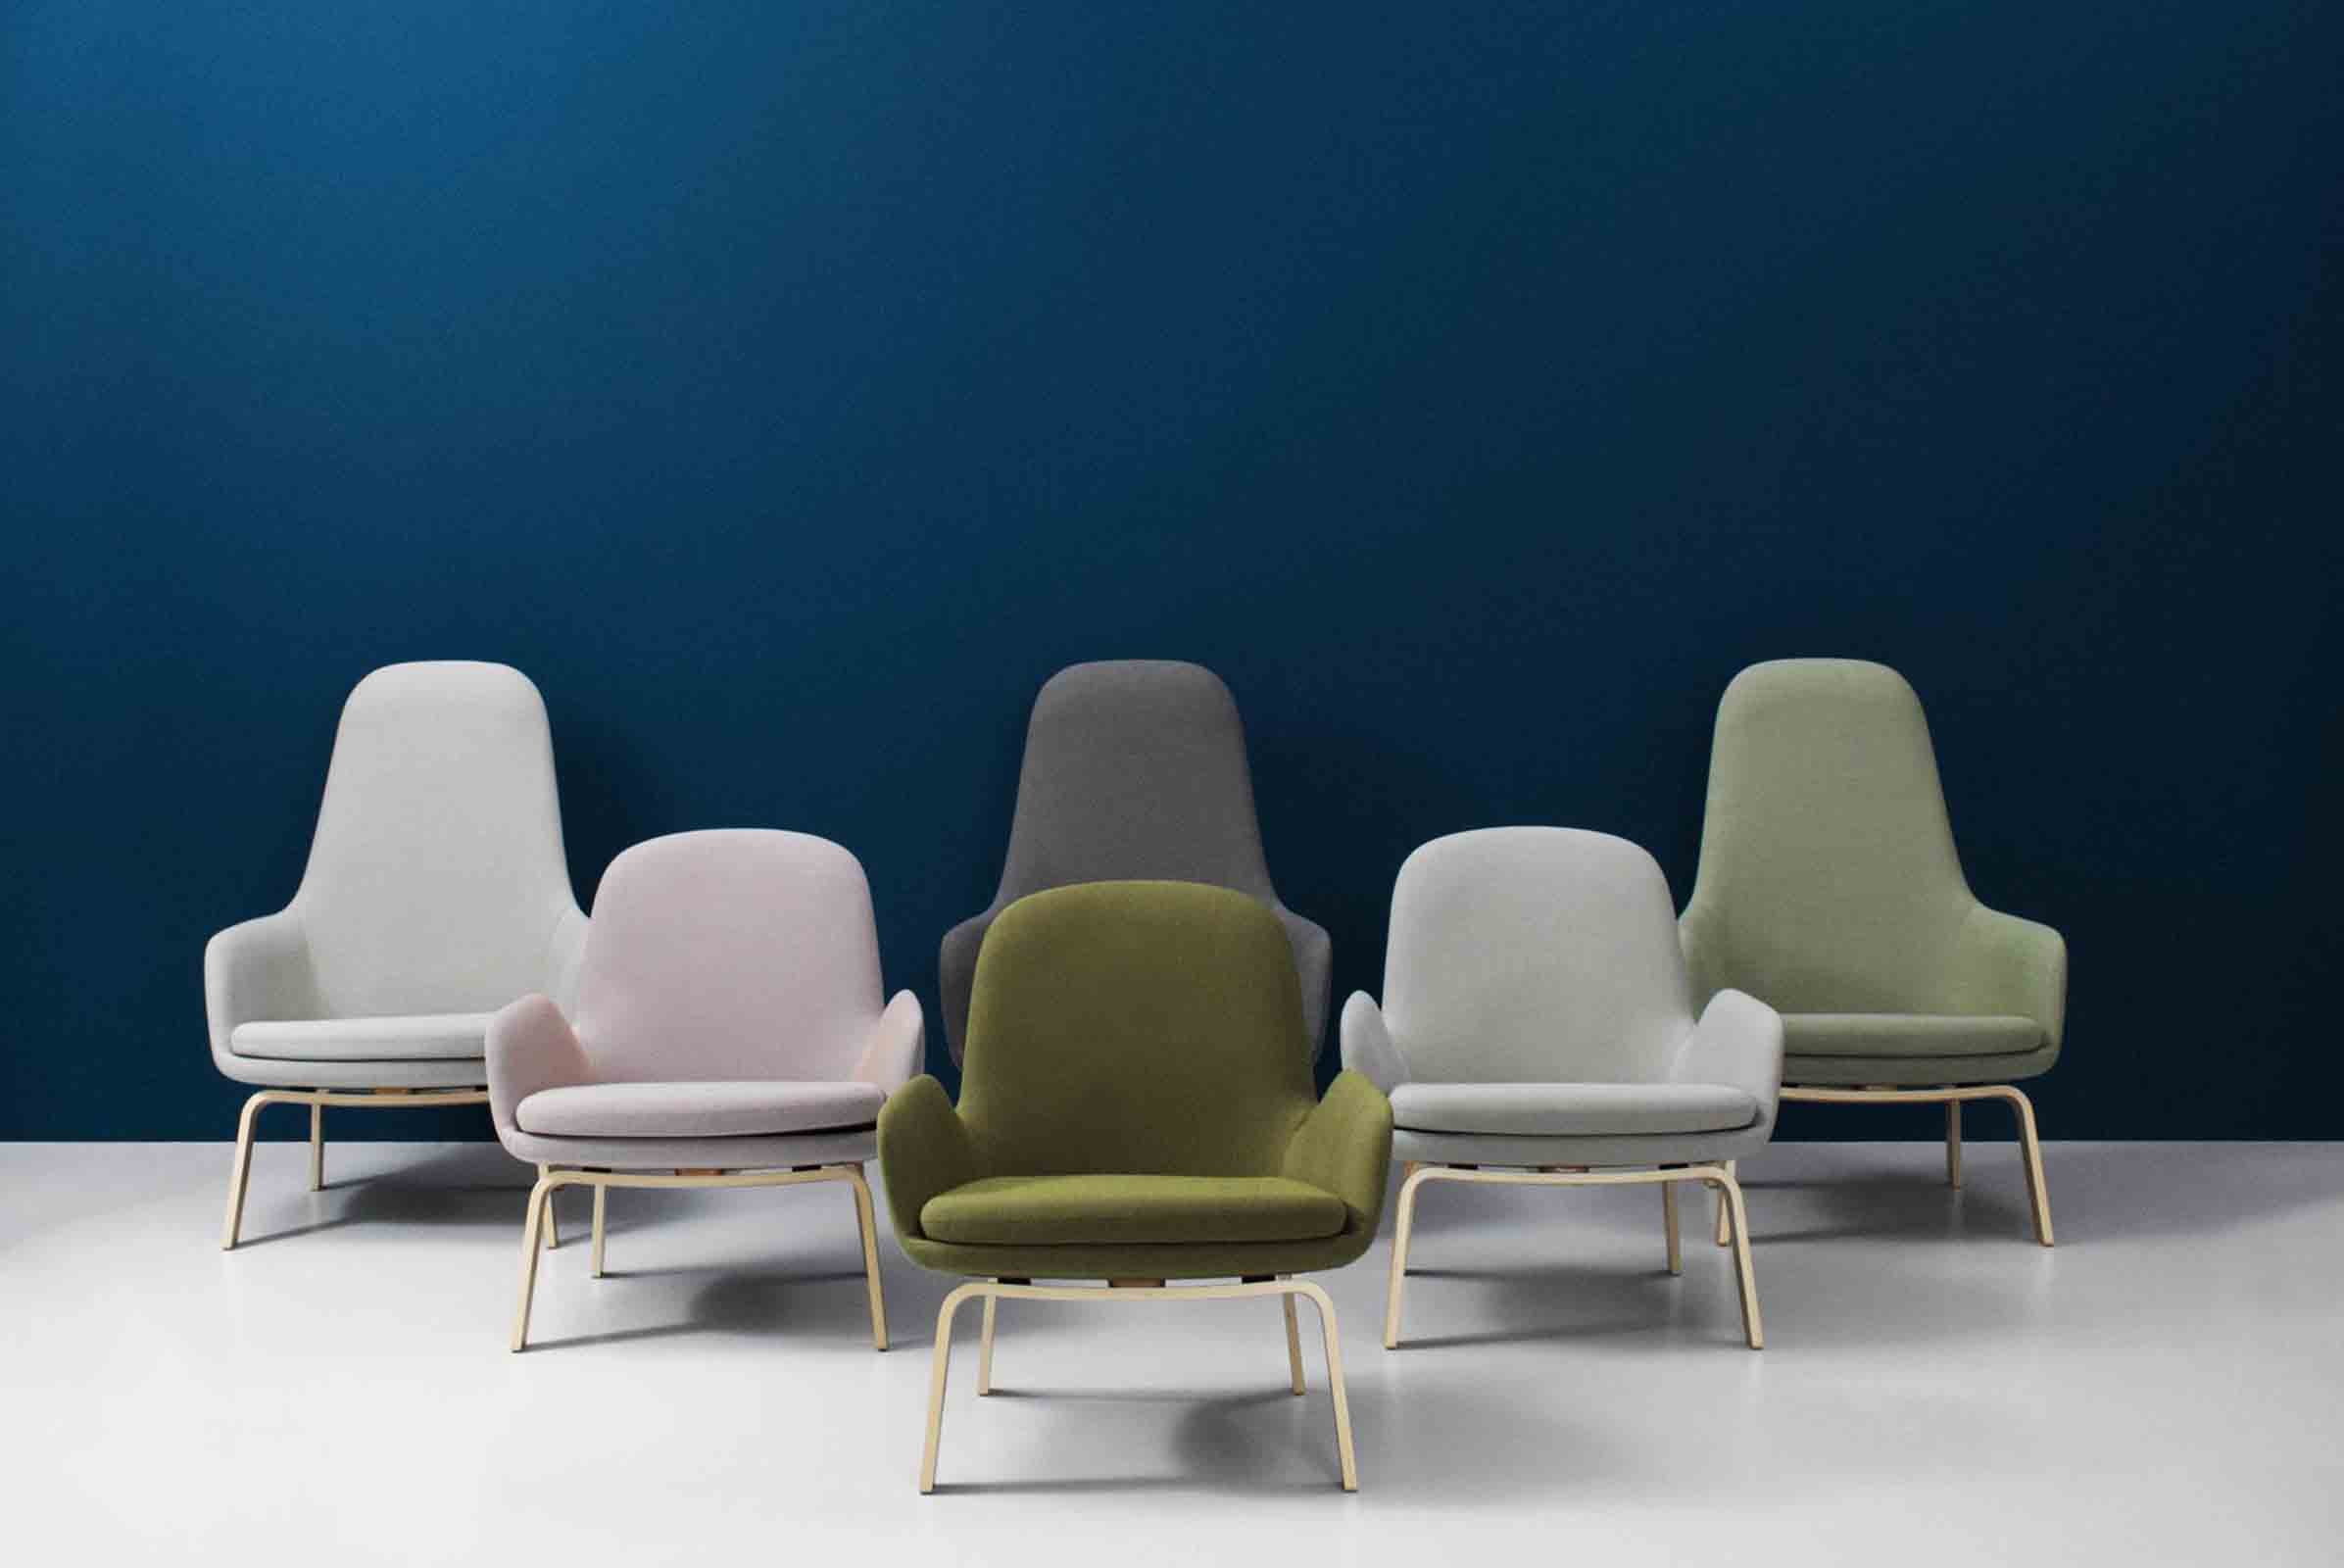 ‘Era’ chair family designed by Simon Legald for Norman Copenhagen